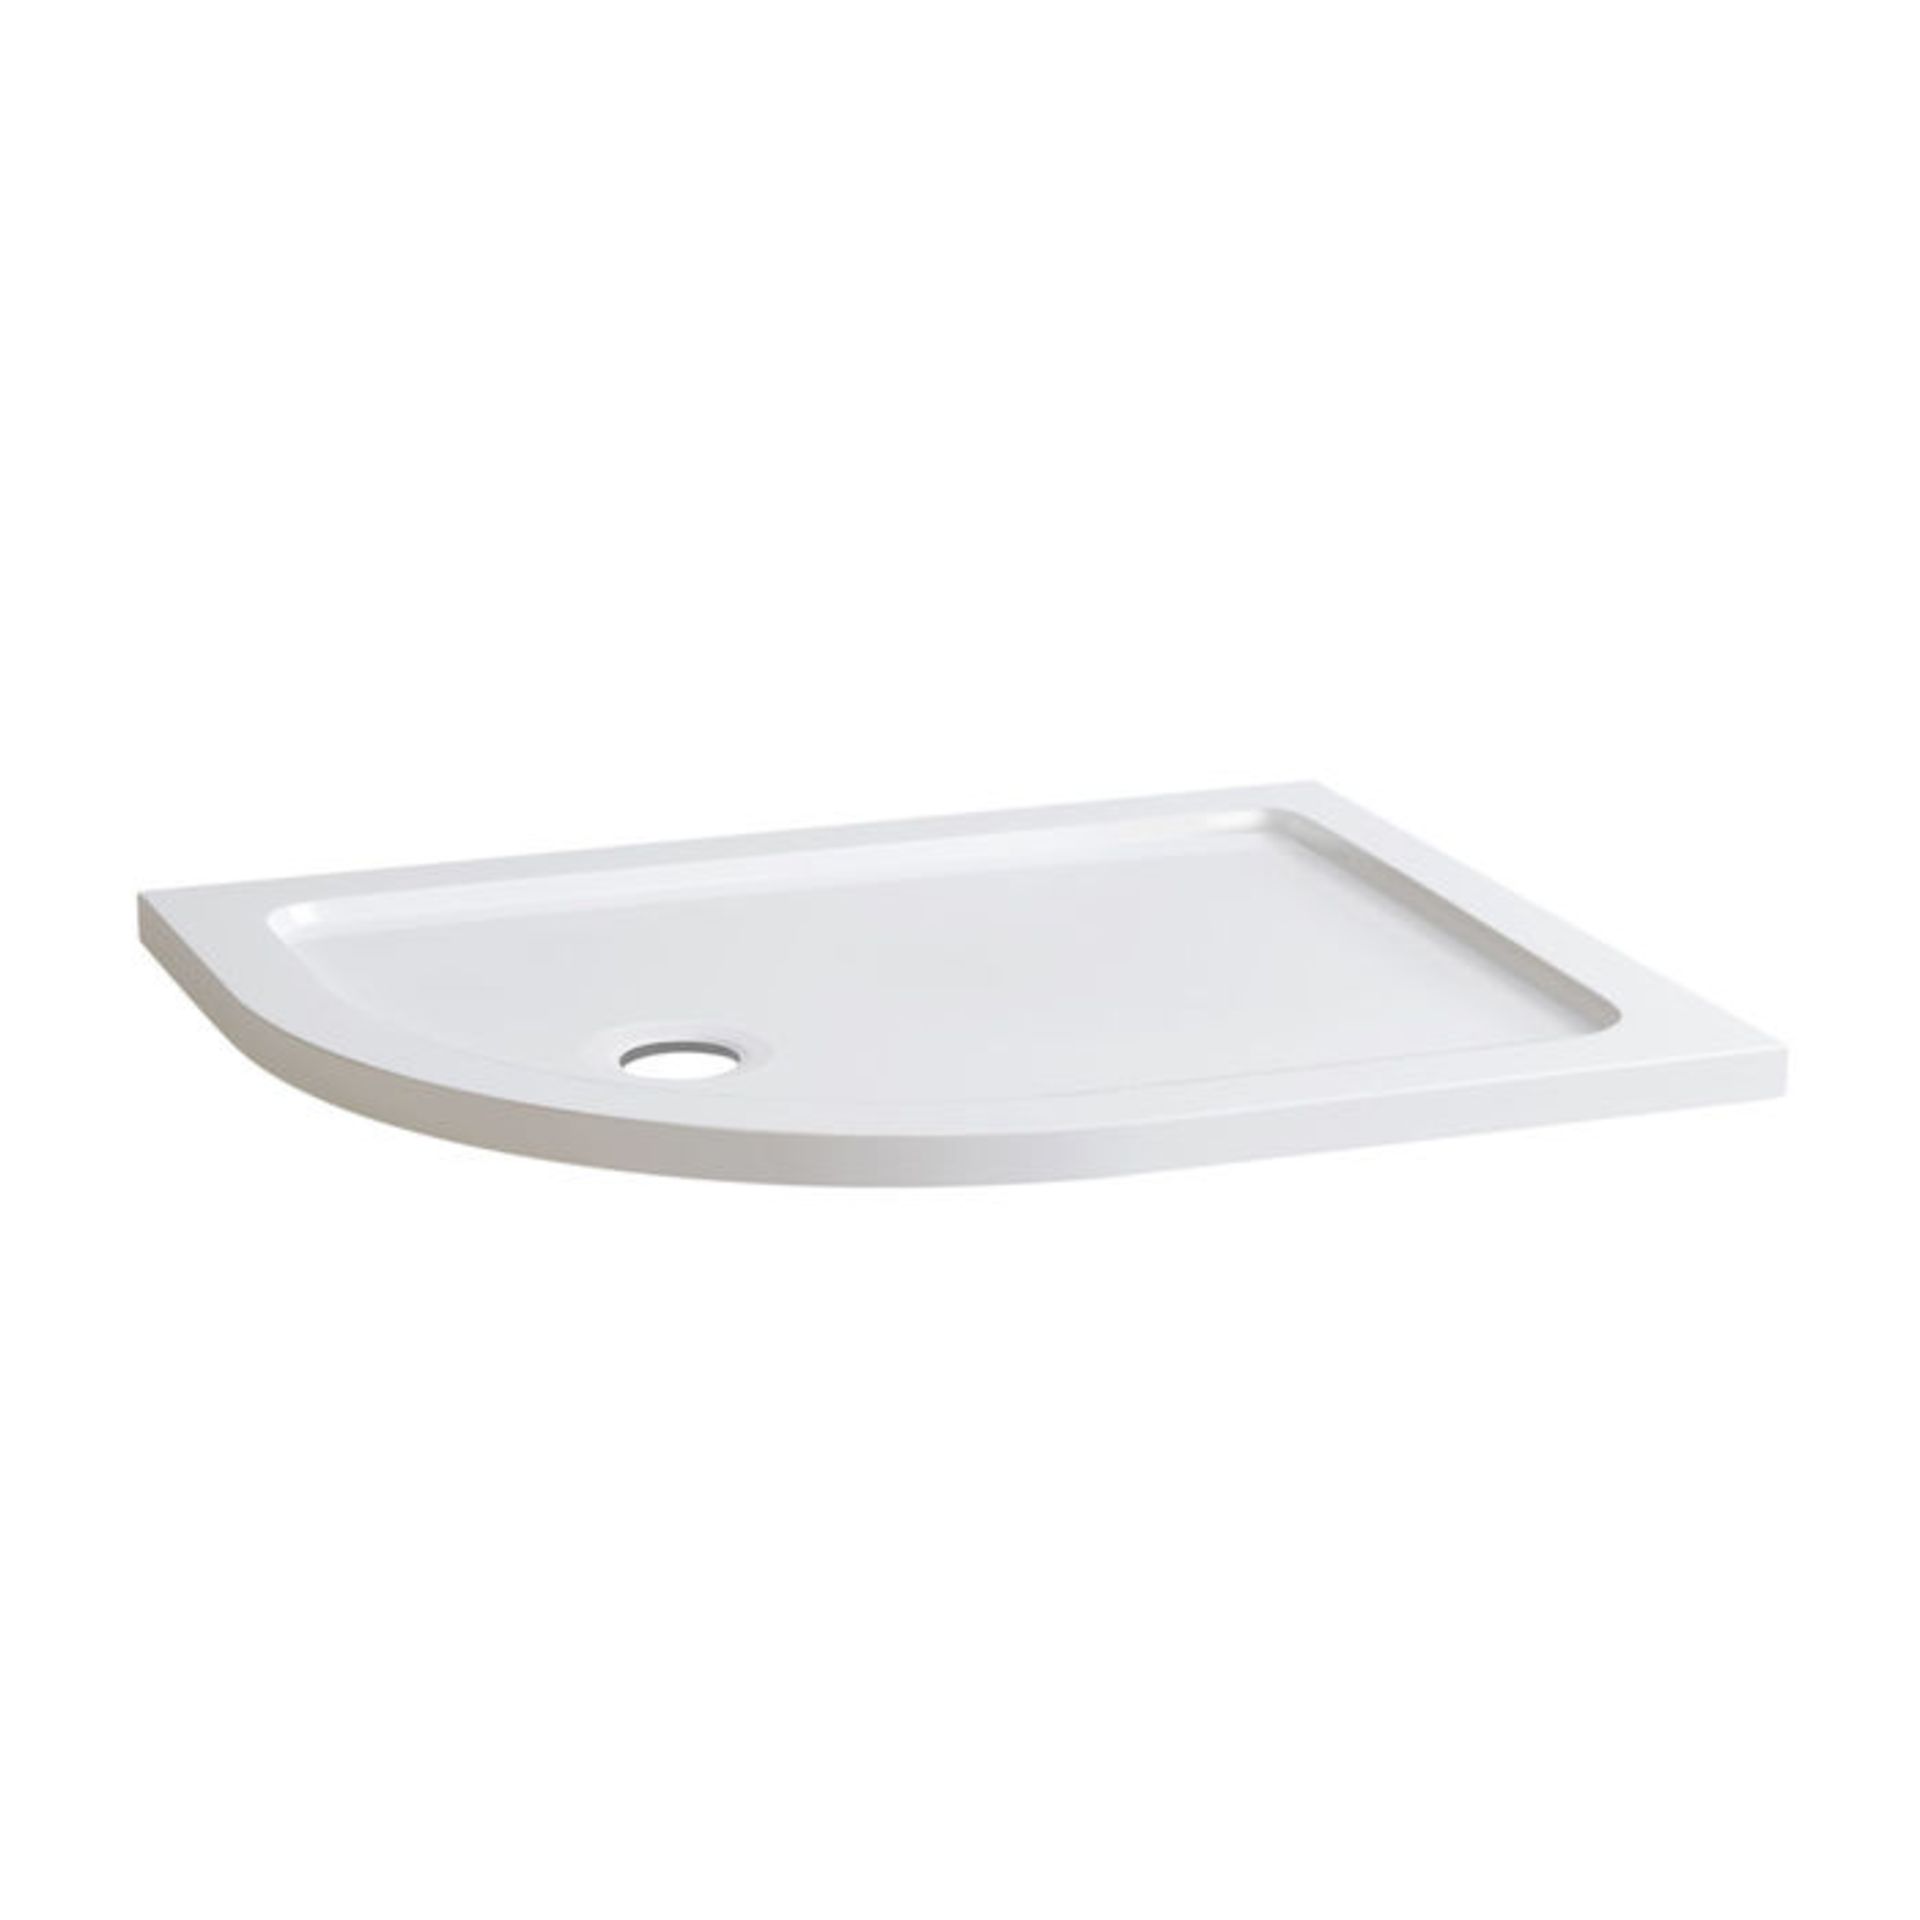 (SP236) 1000x900mm Offset Quadrant Ultra Slim Stone Shower Tray - Left. Low profile ultra slim - Image 2 of 2